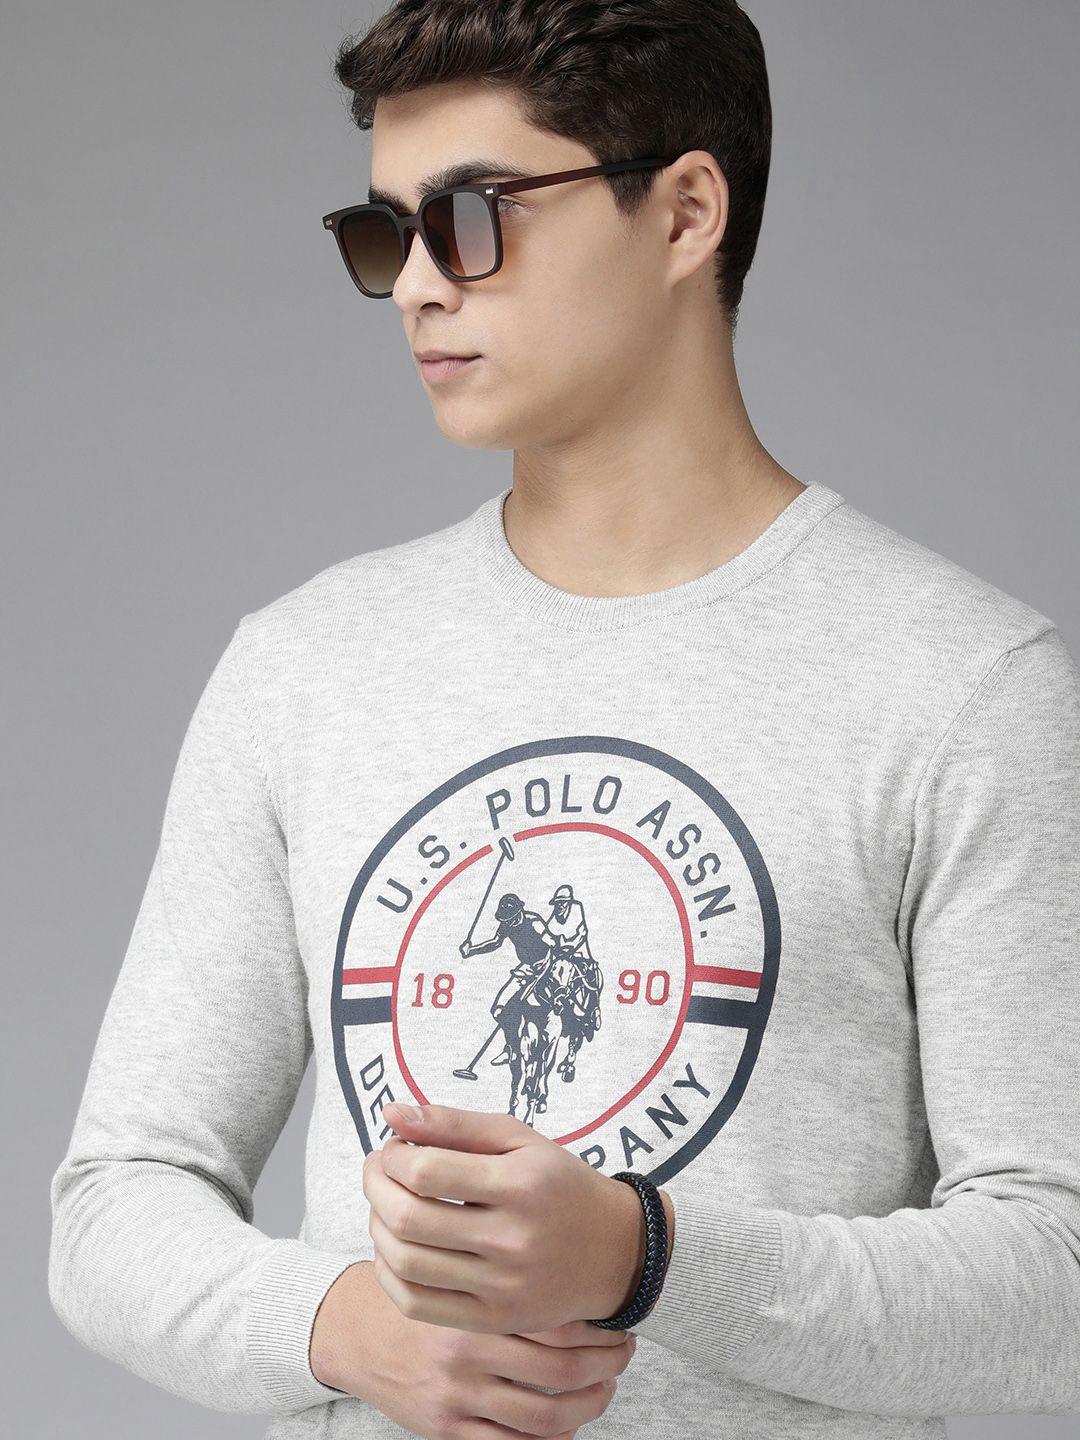 u.s.-polo-assn.-denim-co.-men-grey-melange-brand-logo-print-pullover